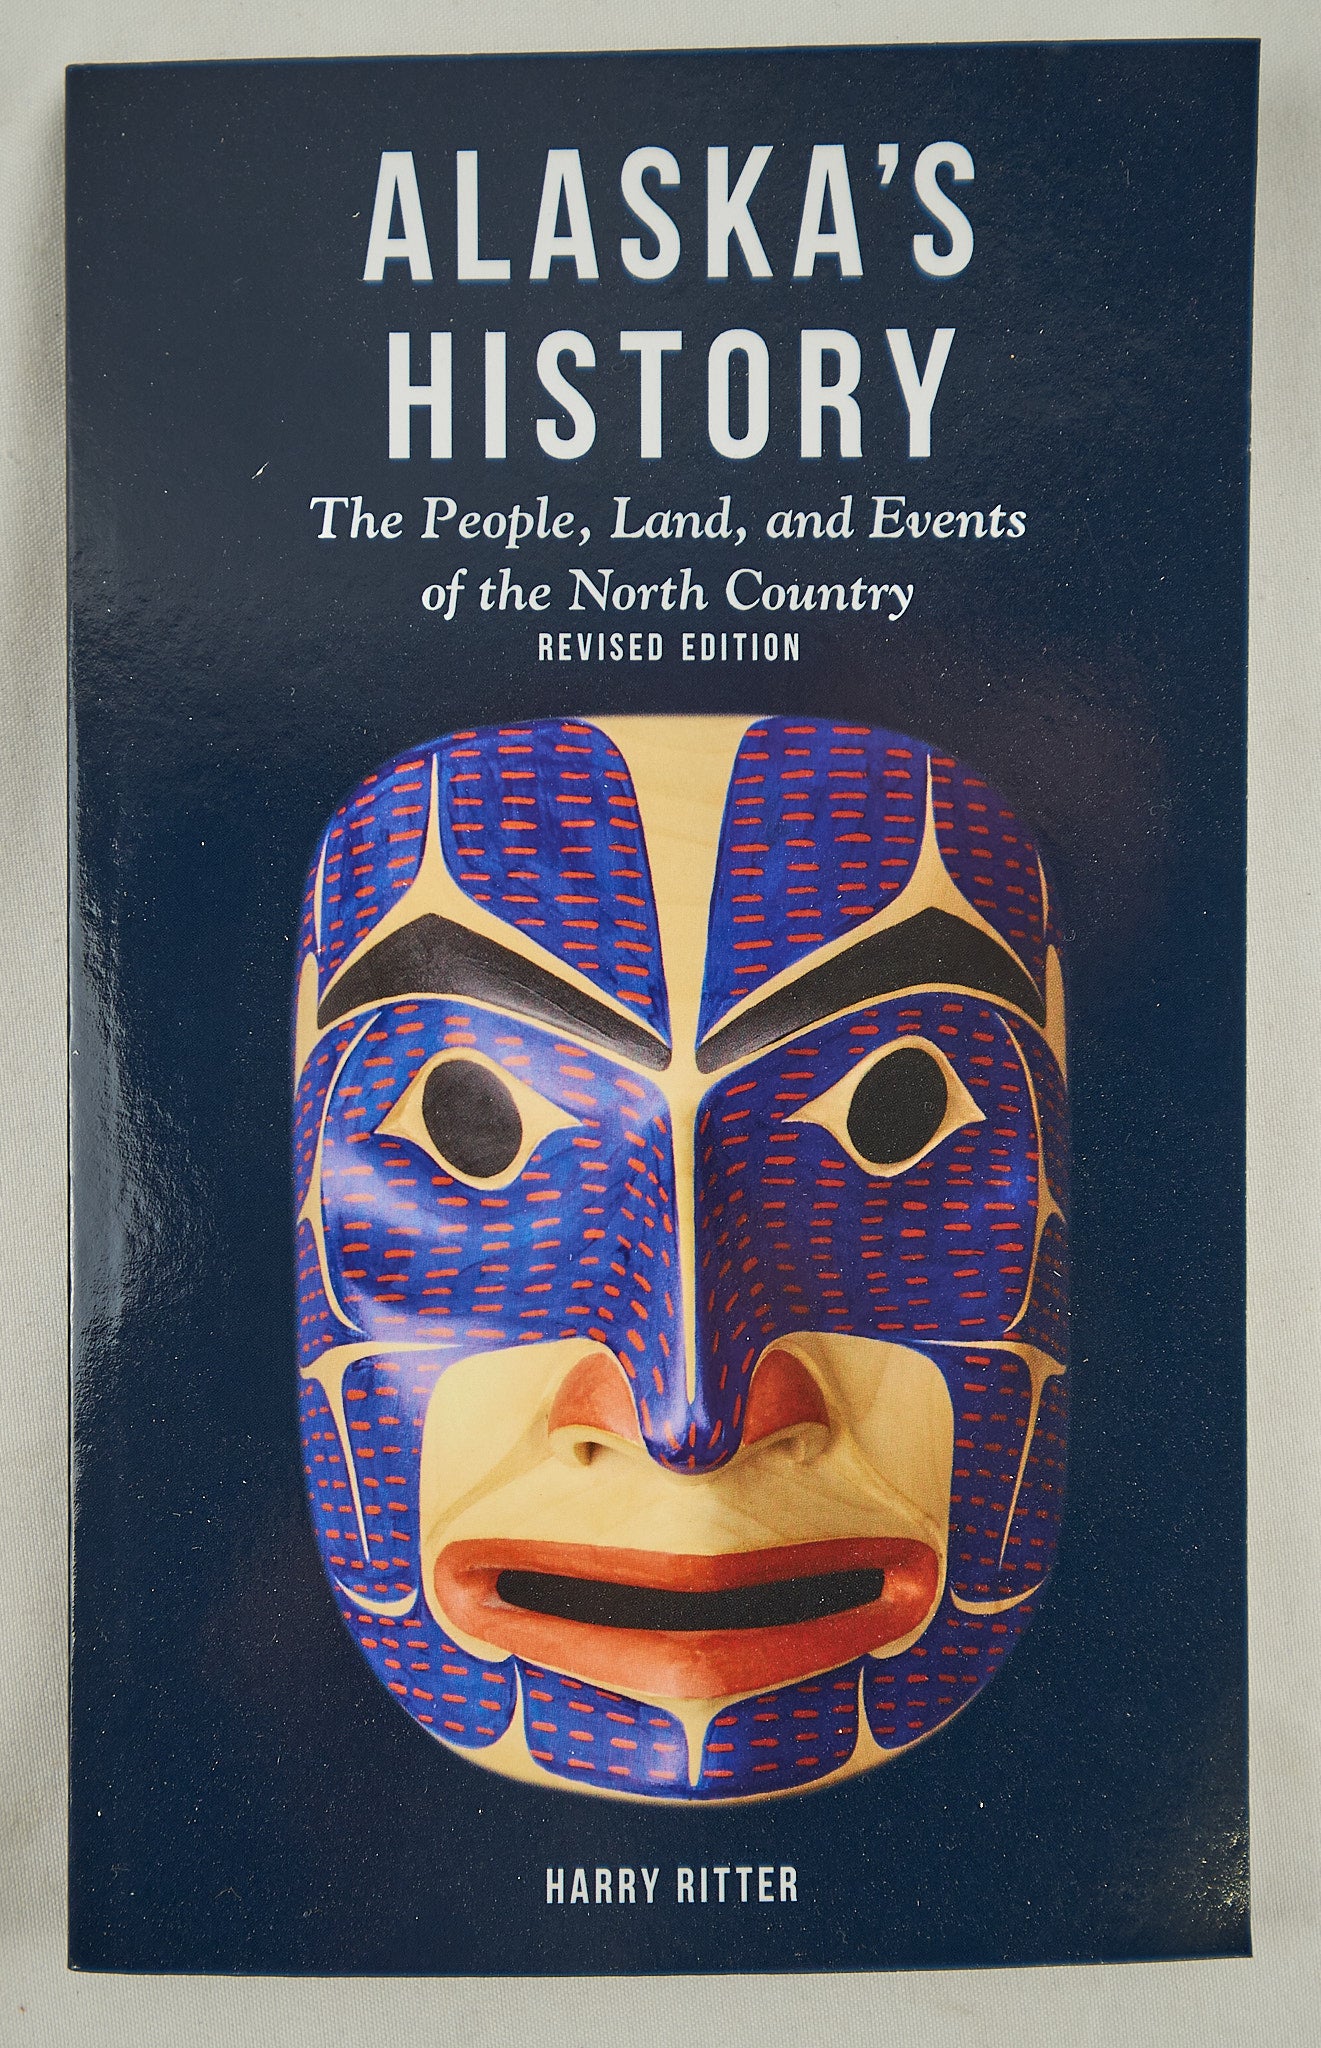 Alaska's History by Harry Ritter